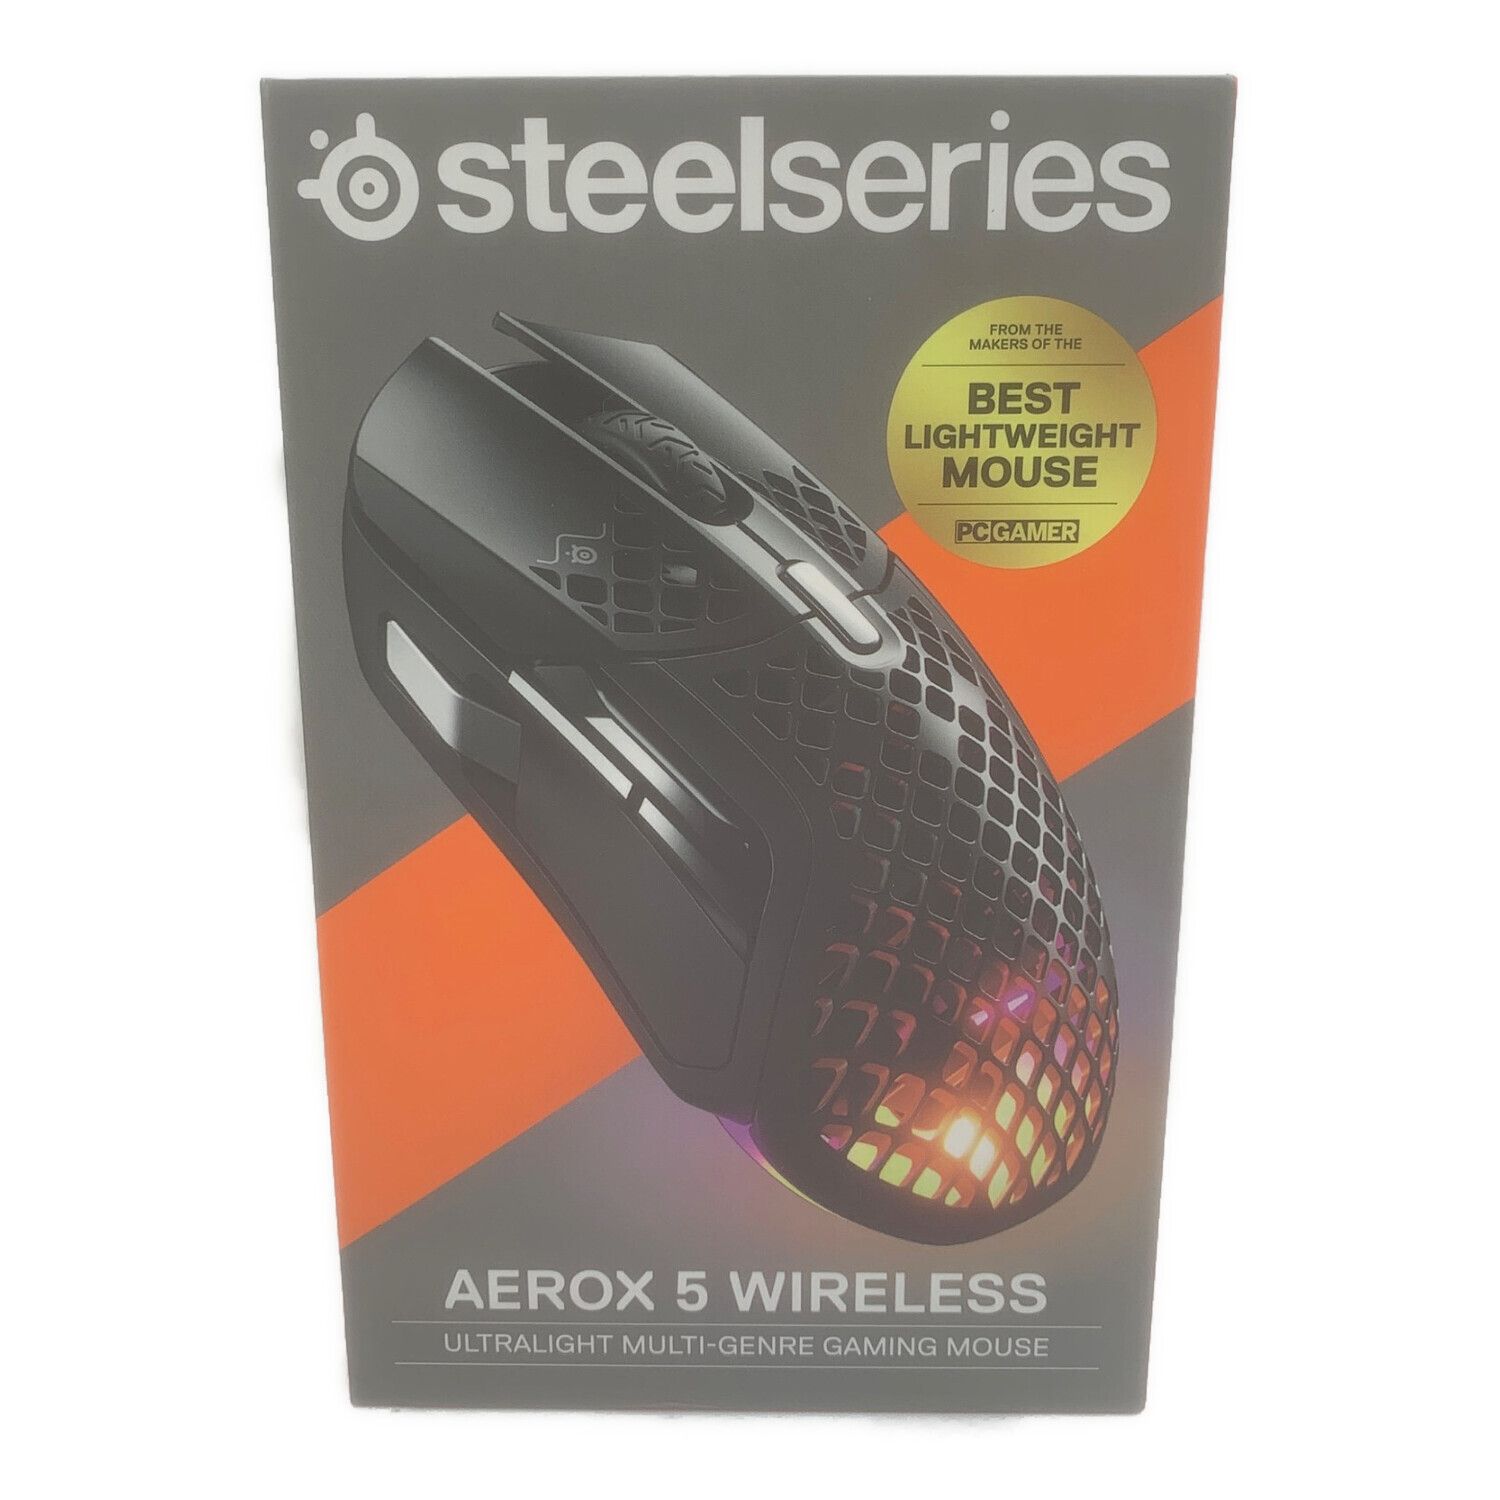 steelseries (スティールシリーズ) ゲーミングマウス AEROX 5 WIRELESS